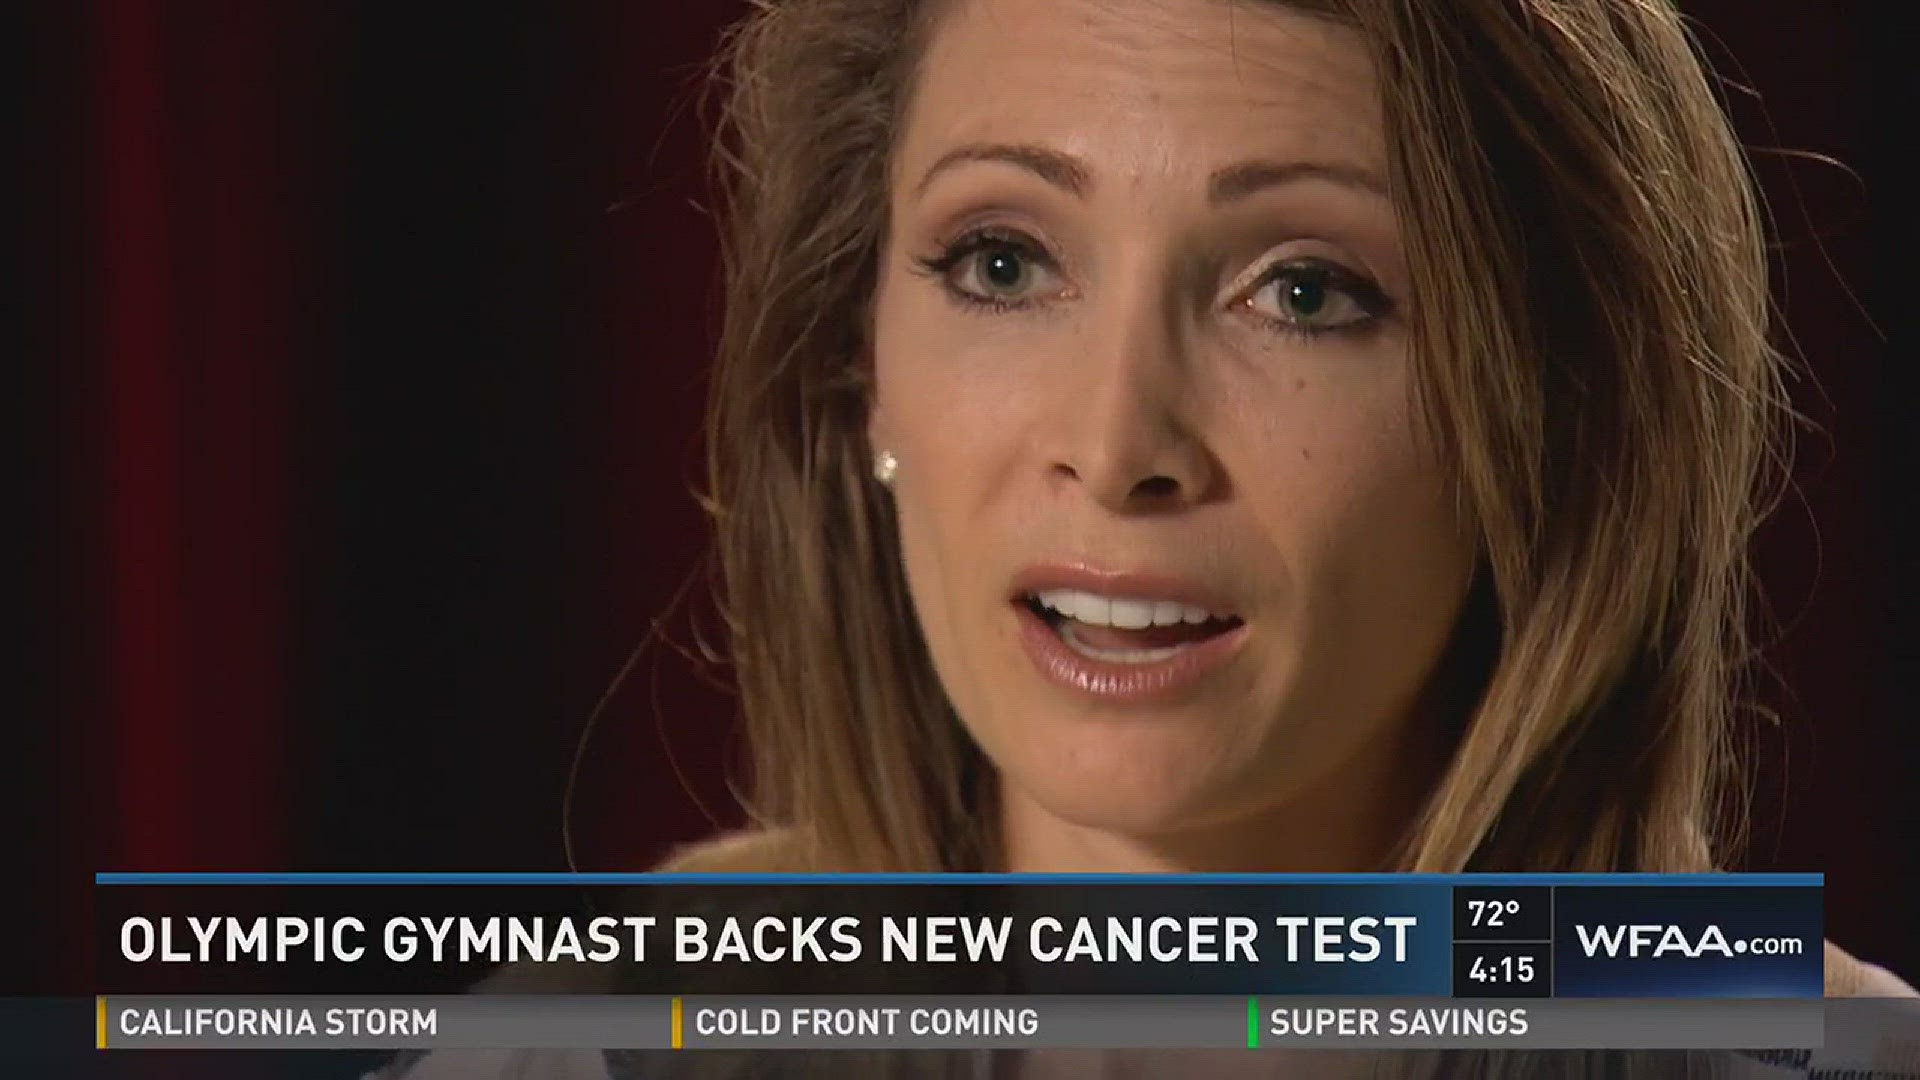 Olympic gymnast backs new cancer test